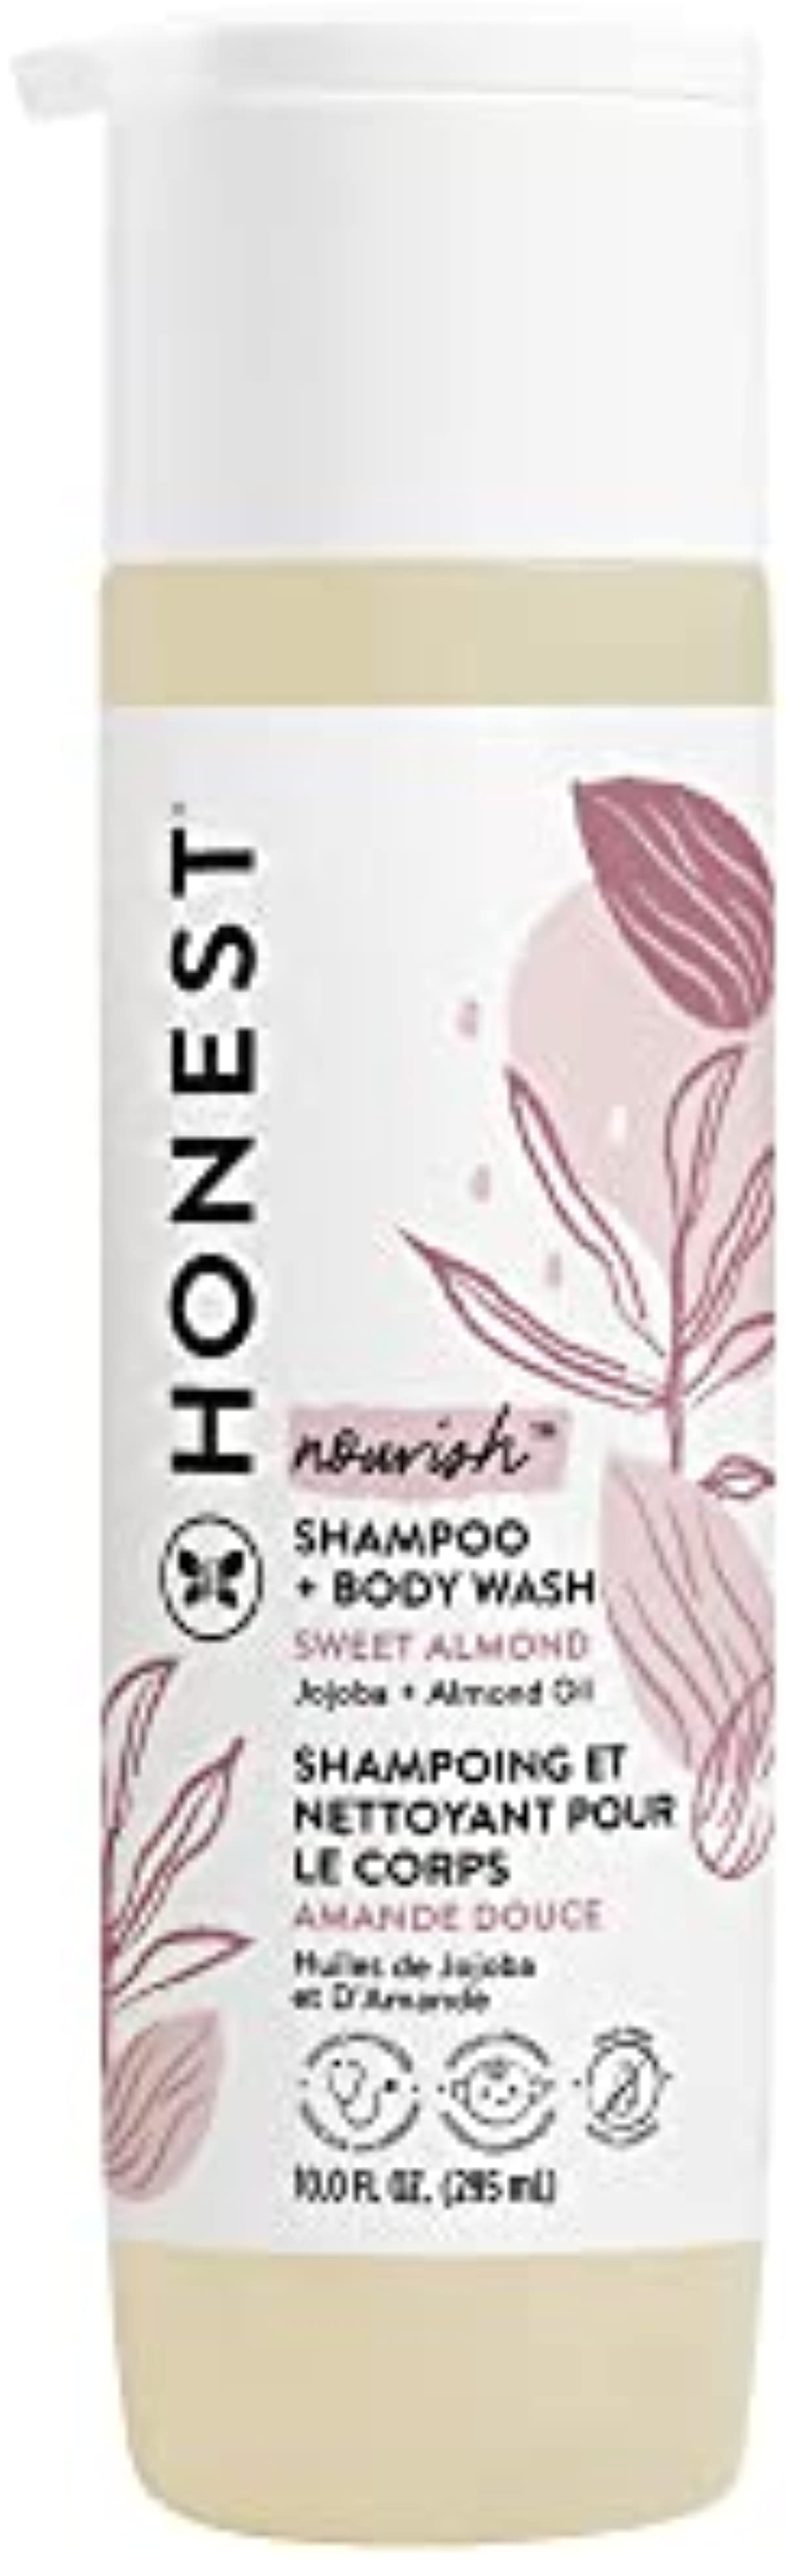 The Honest Company Shampoo + Body Wash, Sweet Almond, 10 Fl. Oz.